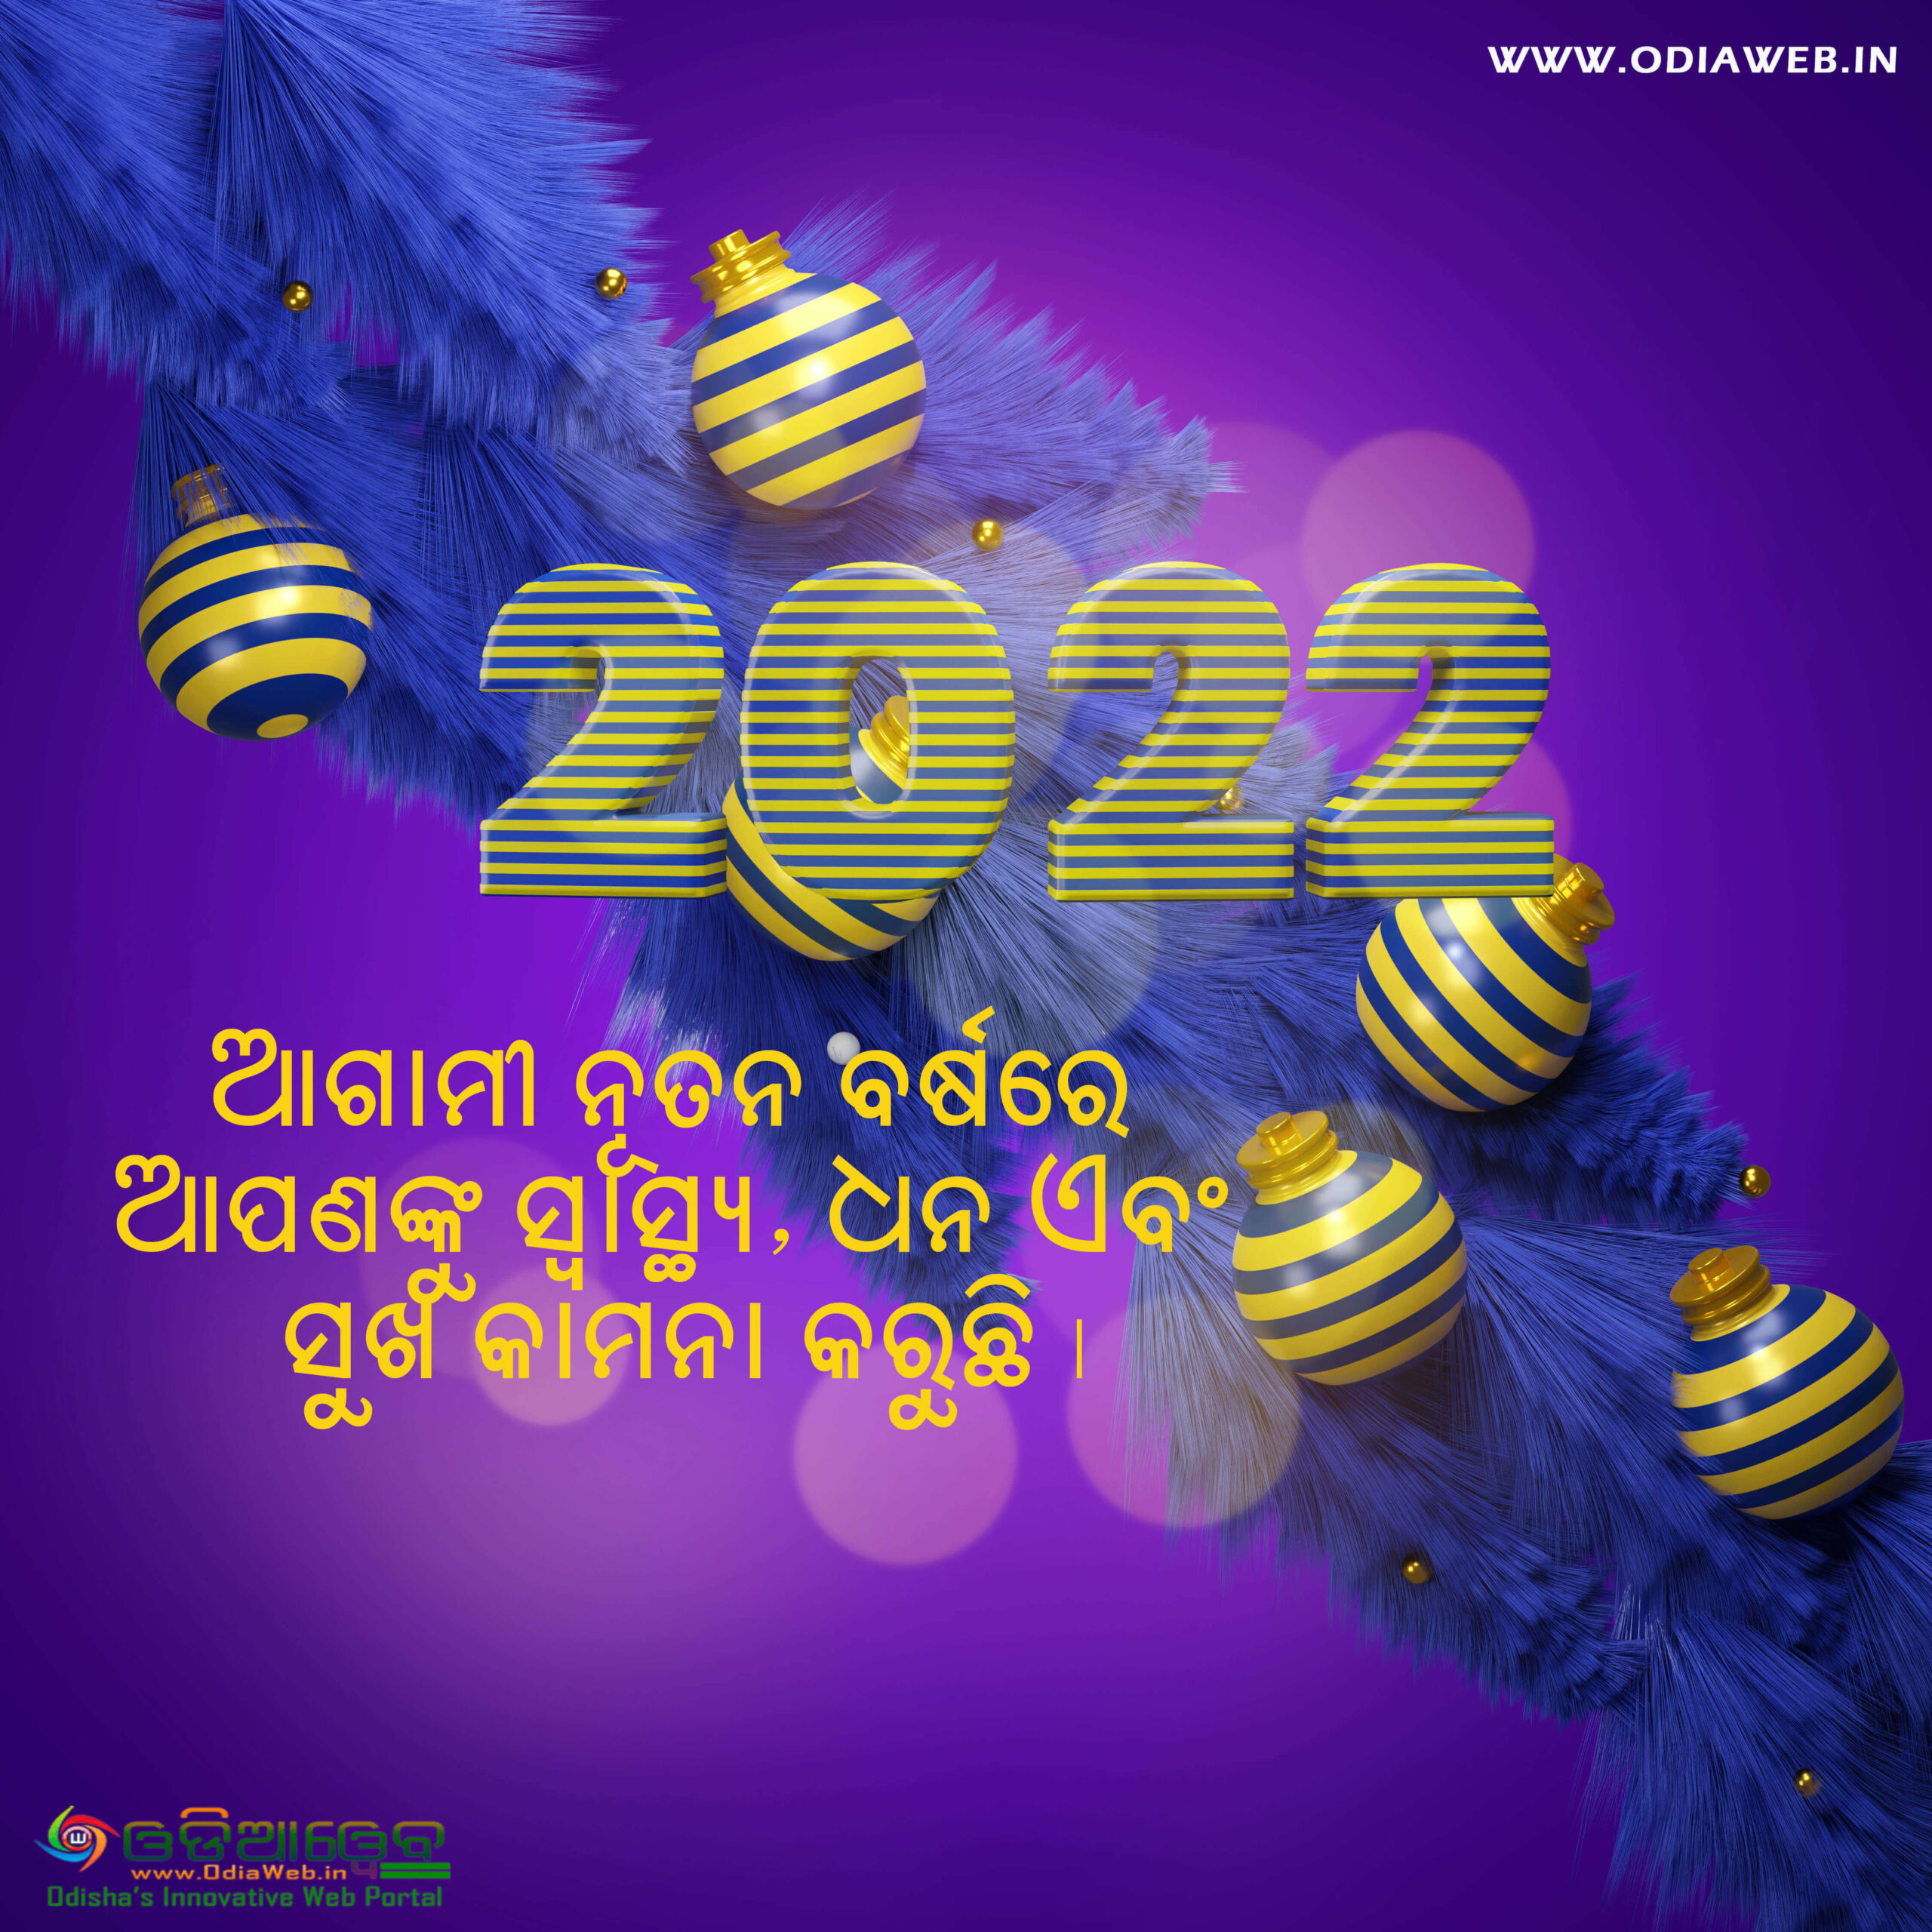 Happy New Year 2022 Wishes6 in Odia